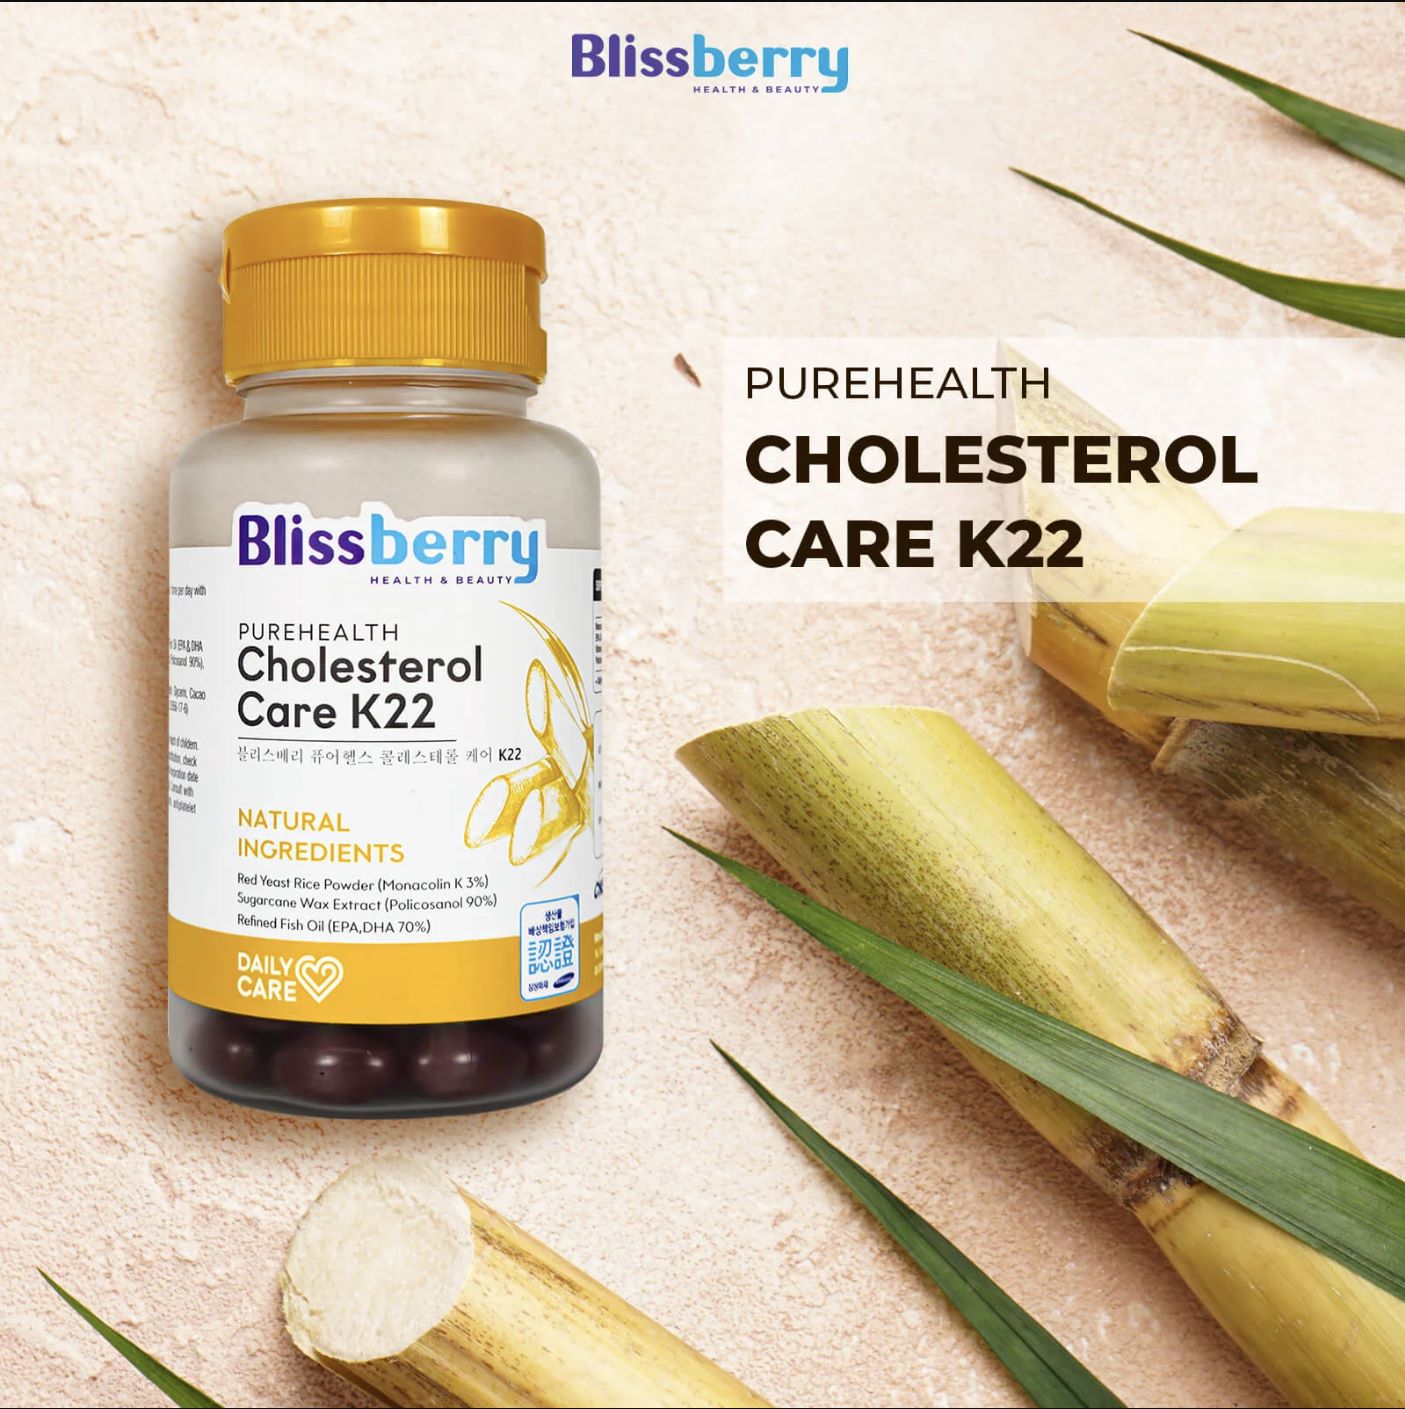 Viên uống giảm Cholesterol Blissberry Purehealth Cholesterol Care K22 giảm